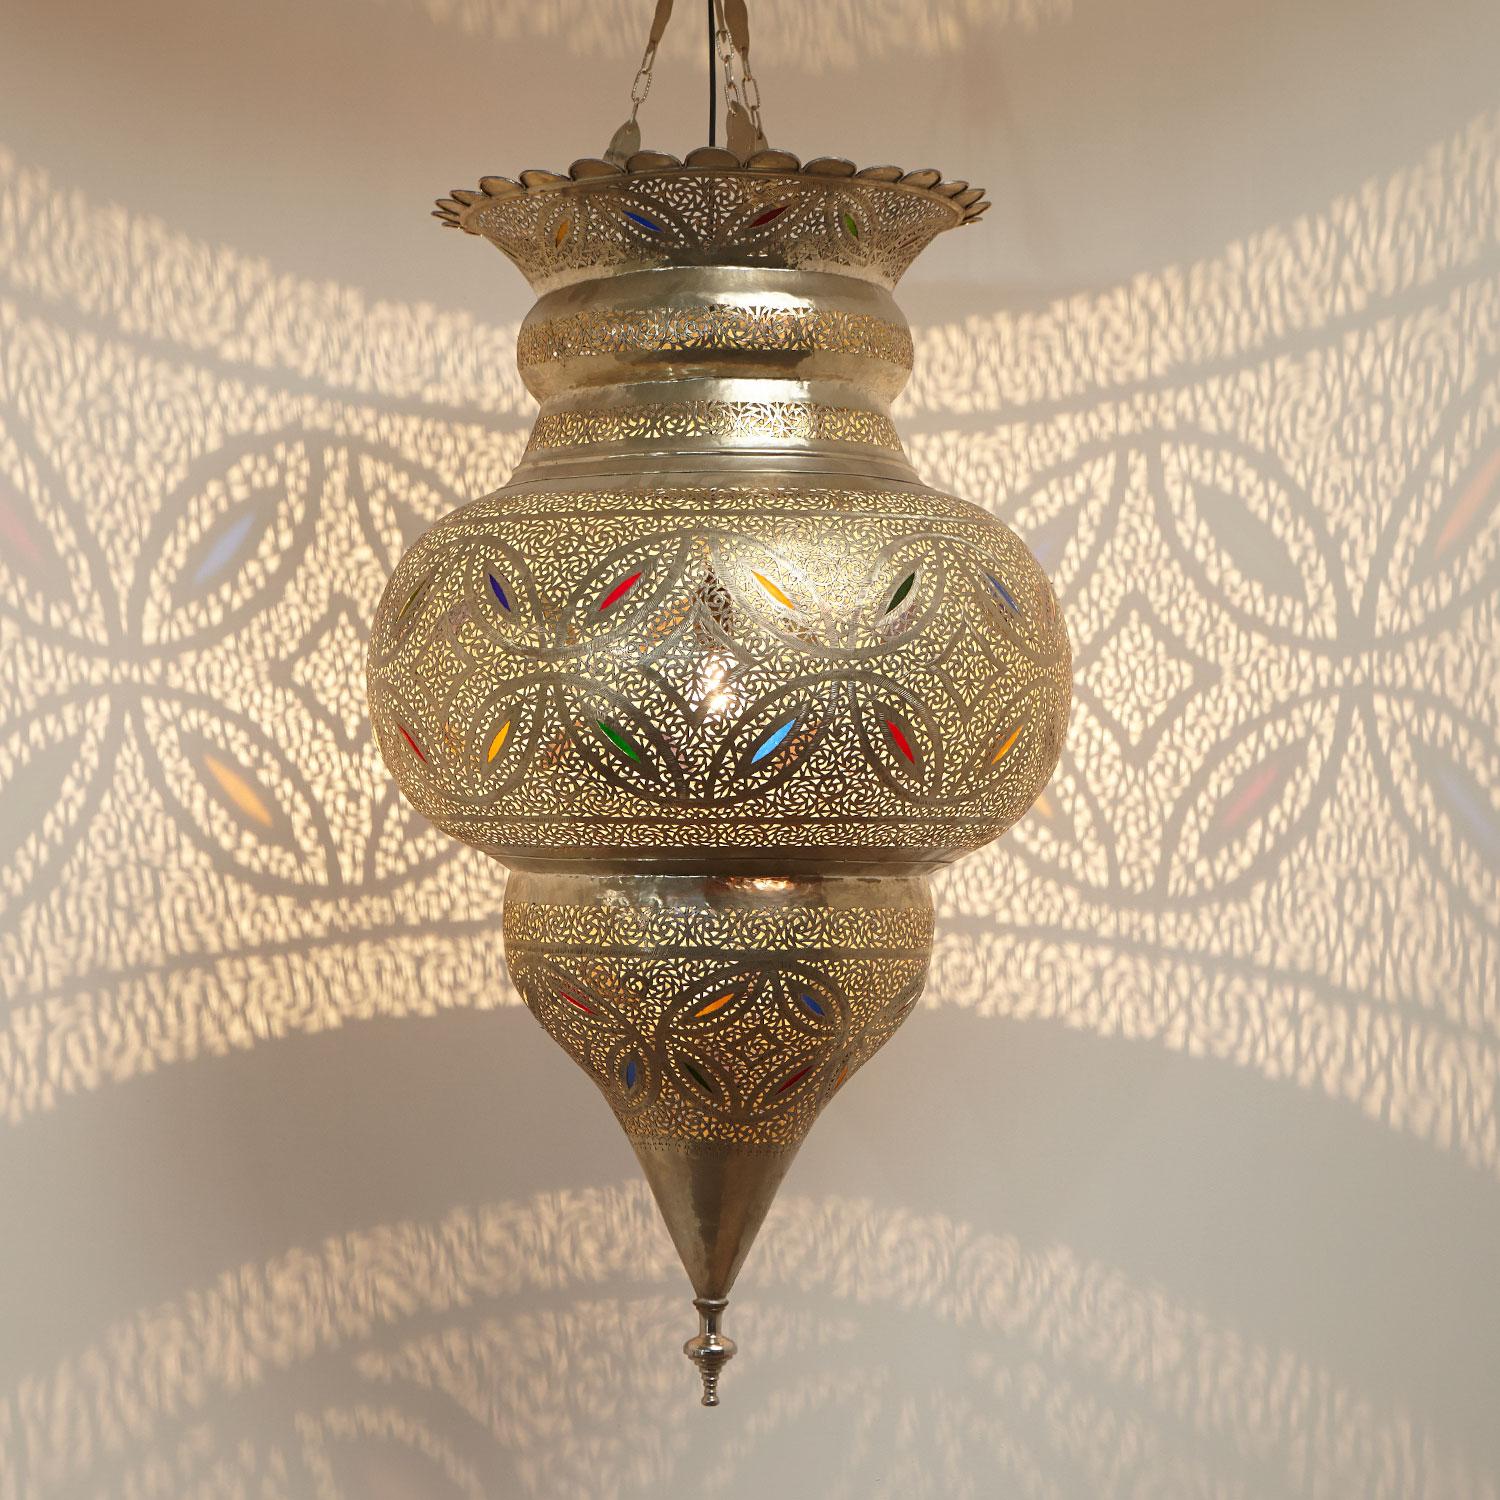 Orientalische Silberlampe #orientdeko ©Casa-Moro